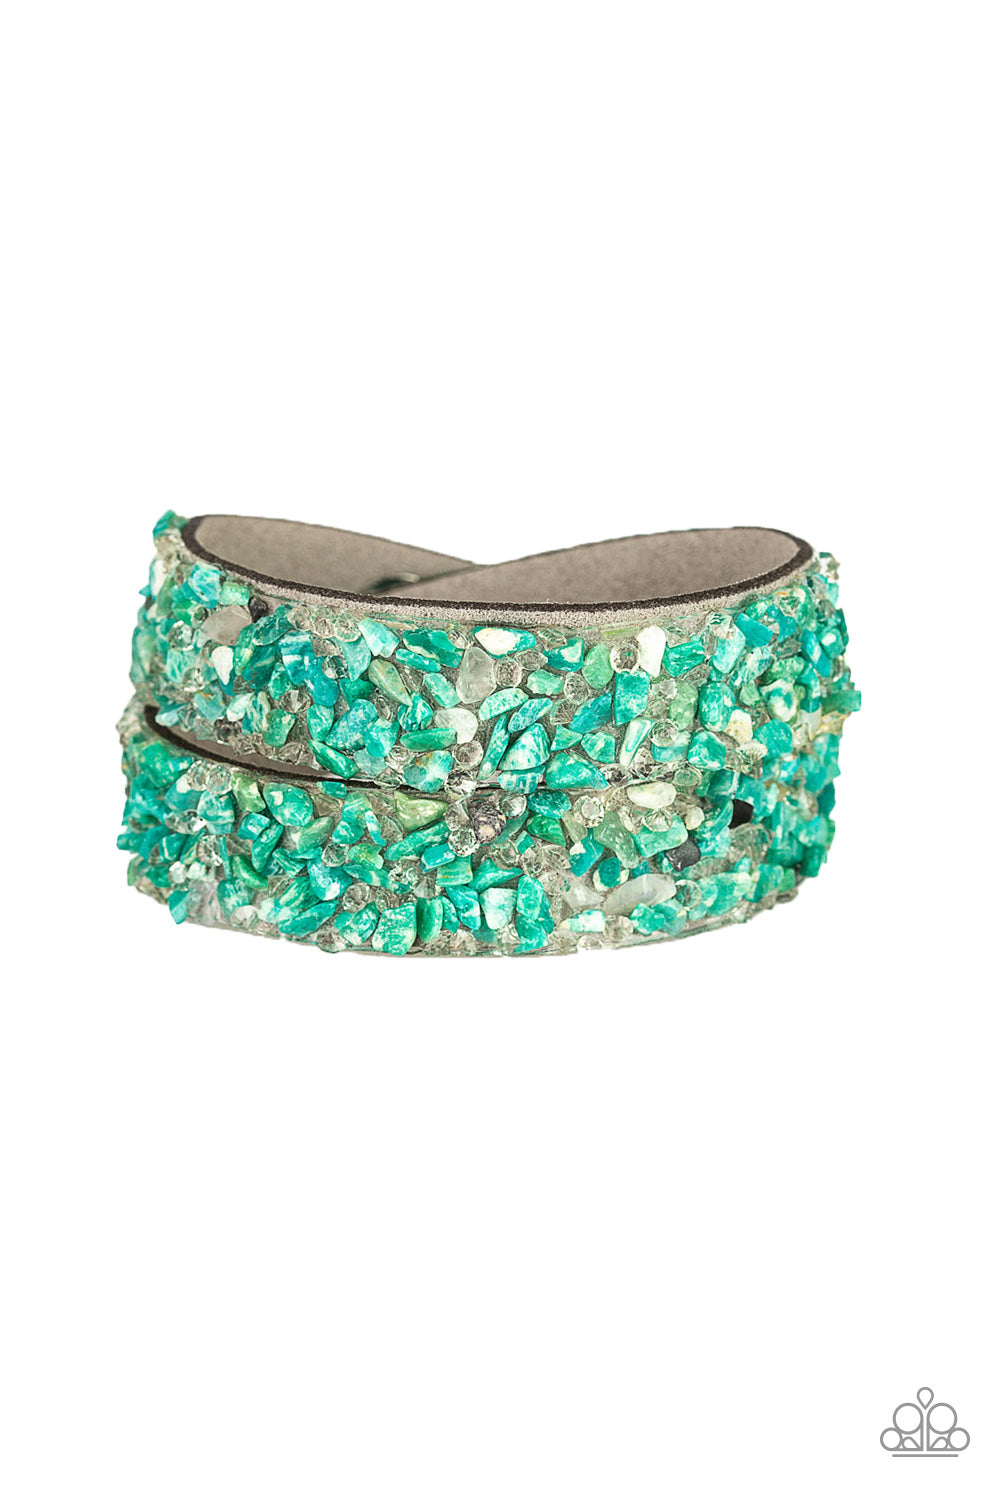 Mystery Bracelet Bags – Agapi and Zoe Inc